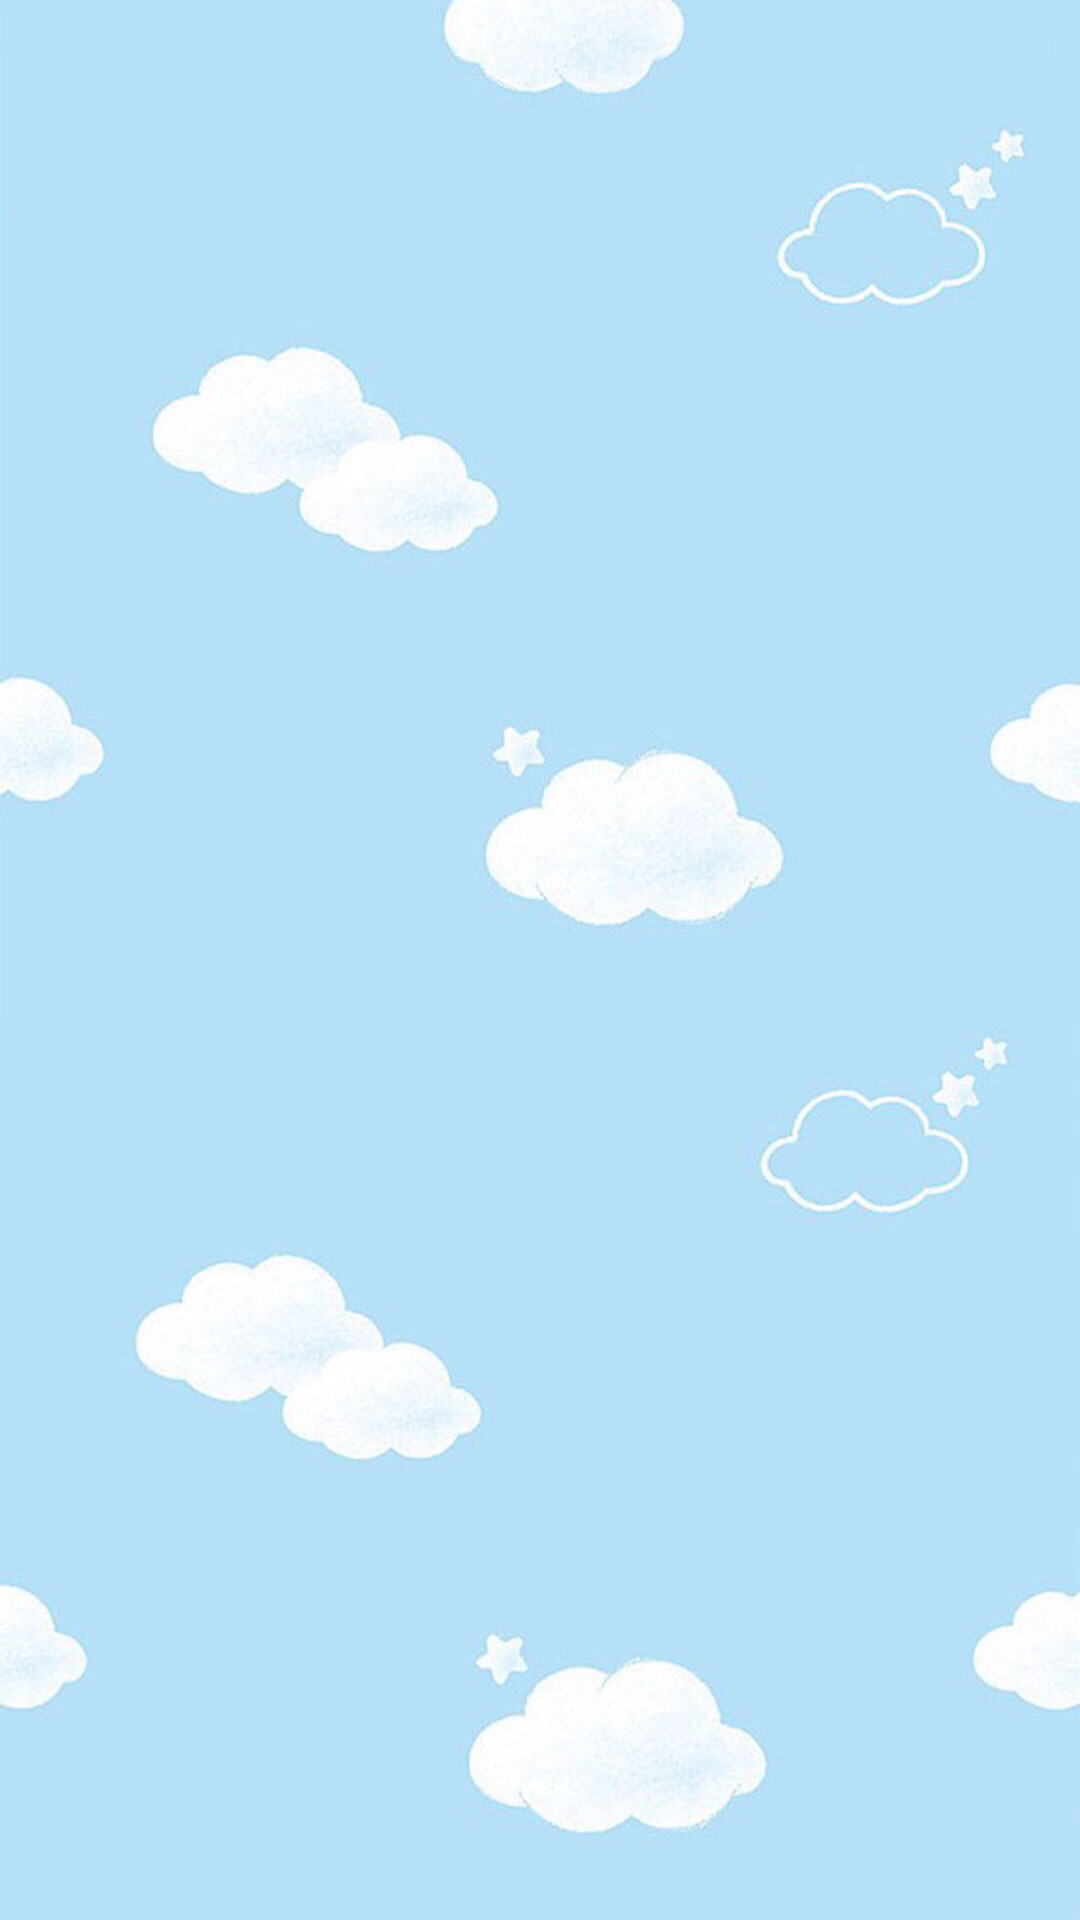 1080x1920 Blue white mini clouds stars iphone wallpaper phone background lock screen